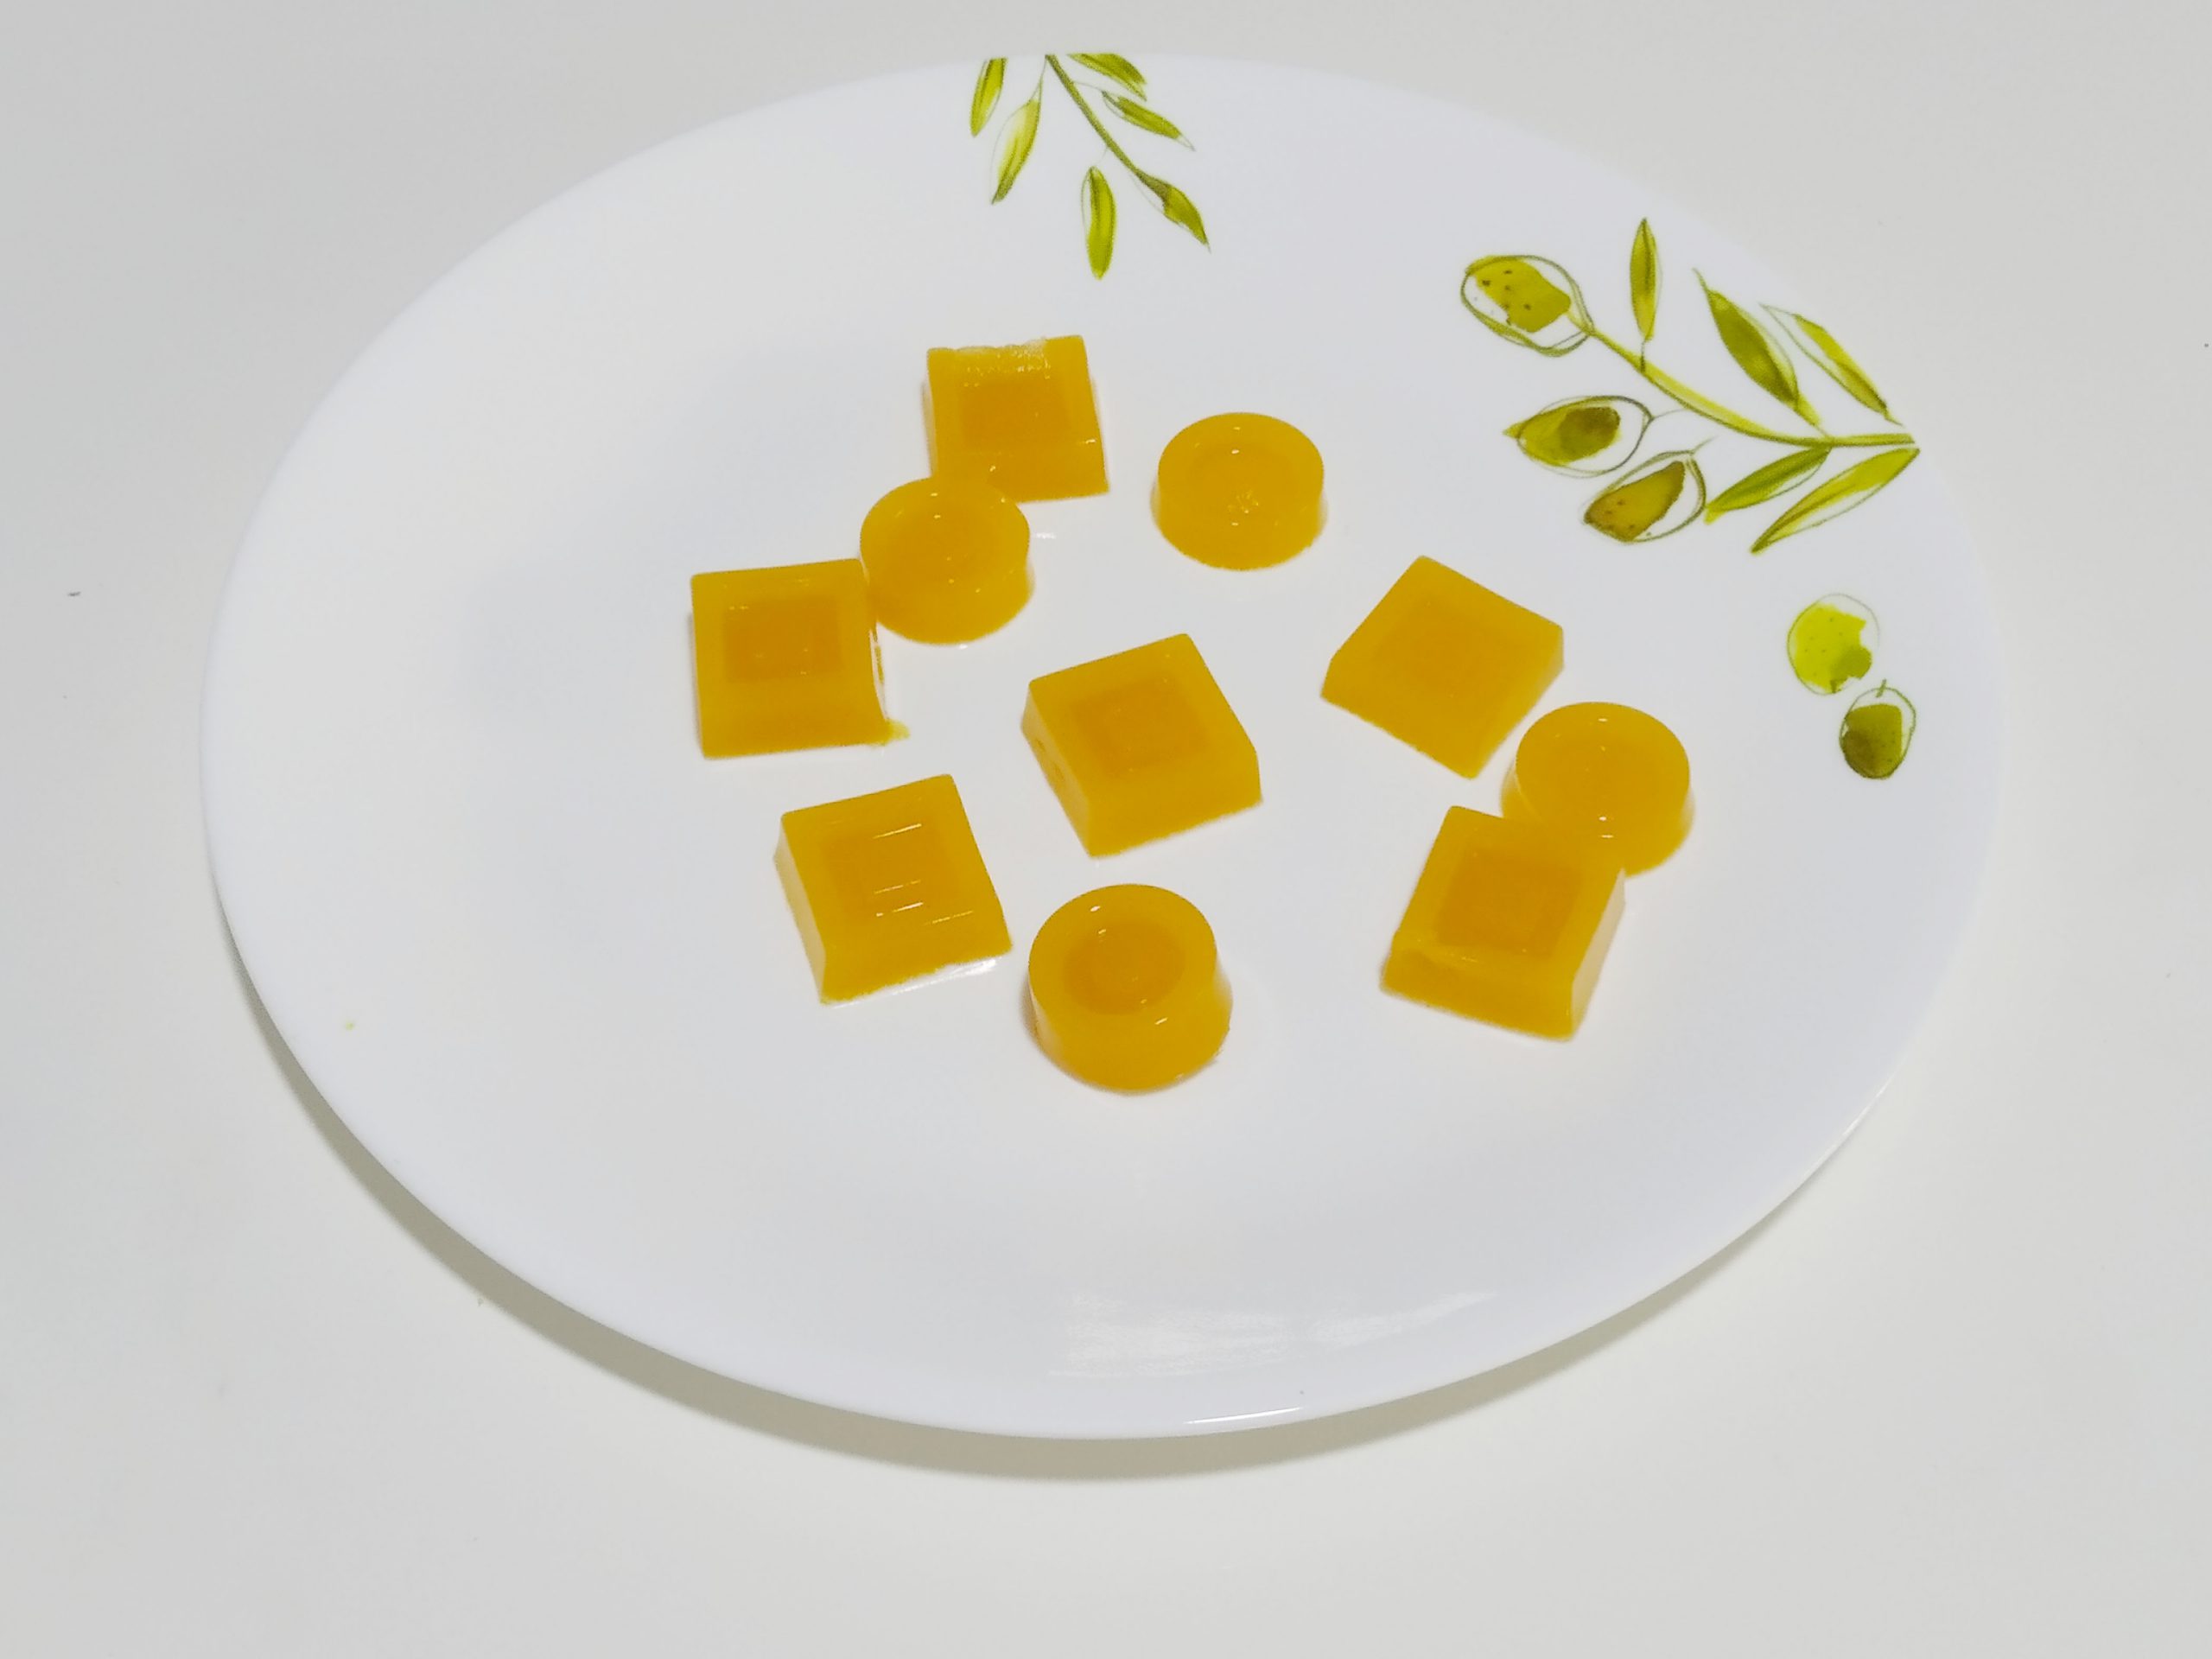 Homemade mango jelly recipe made with agar agar